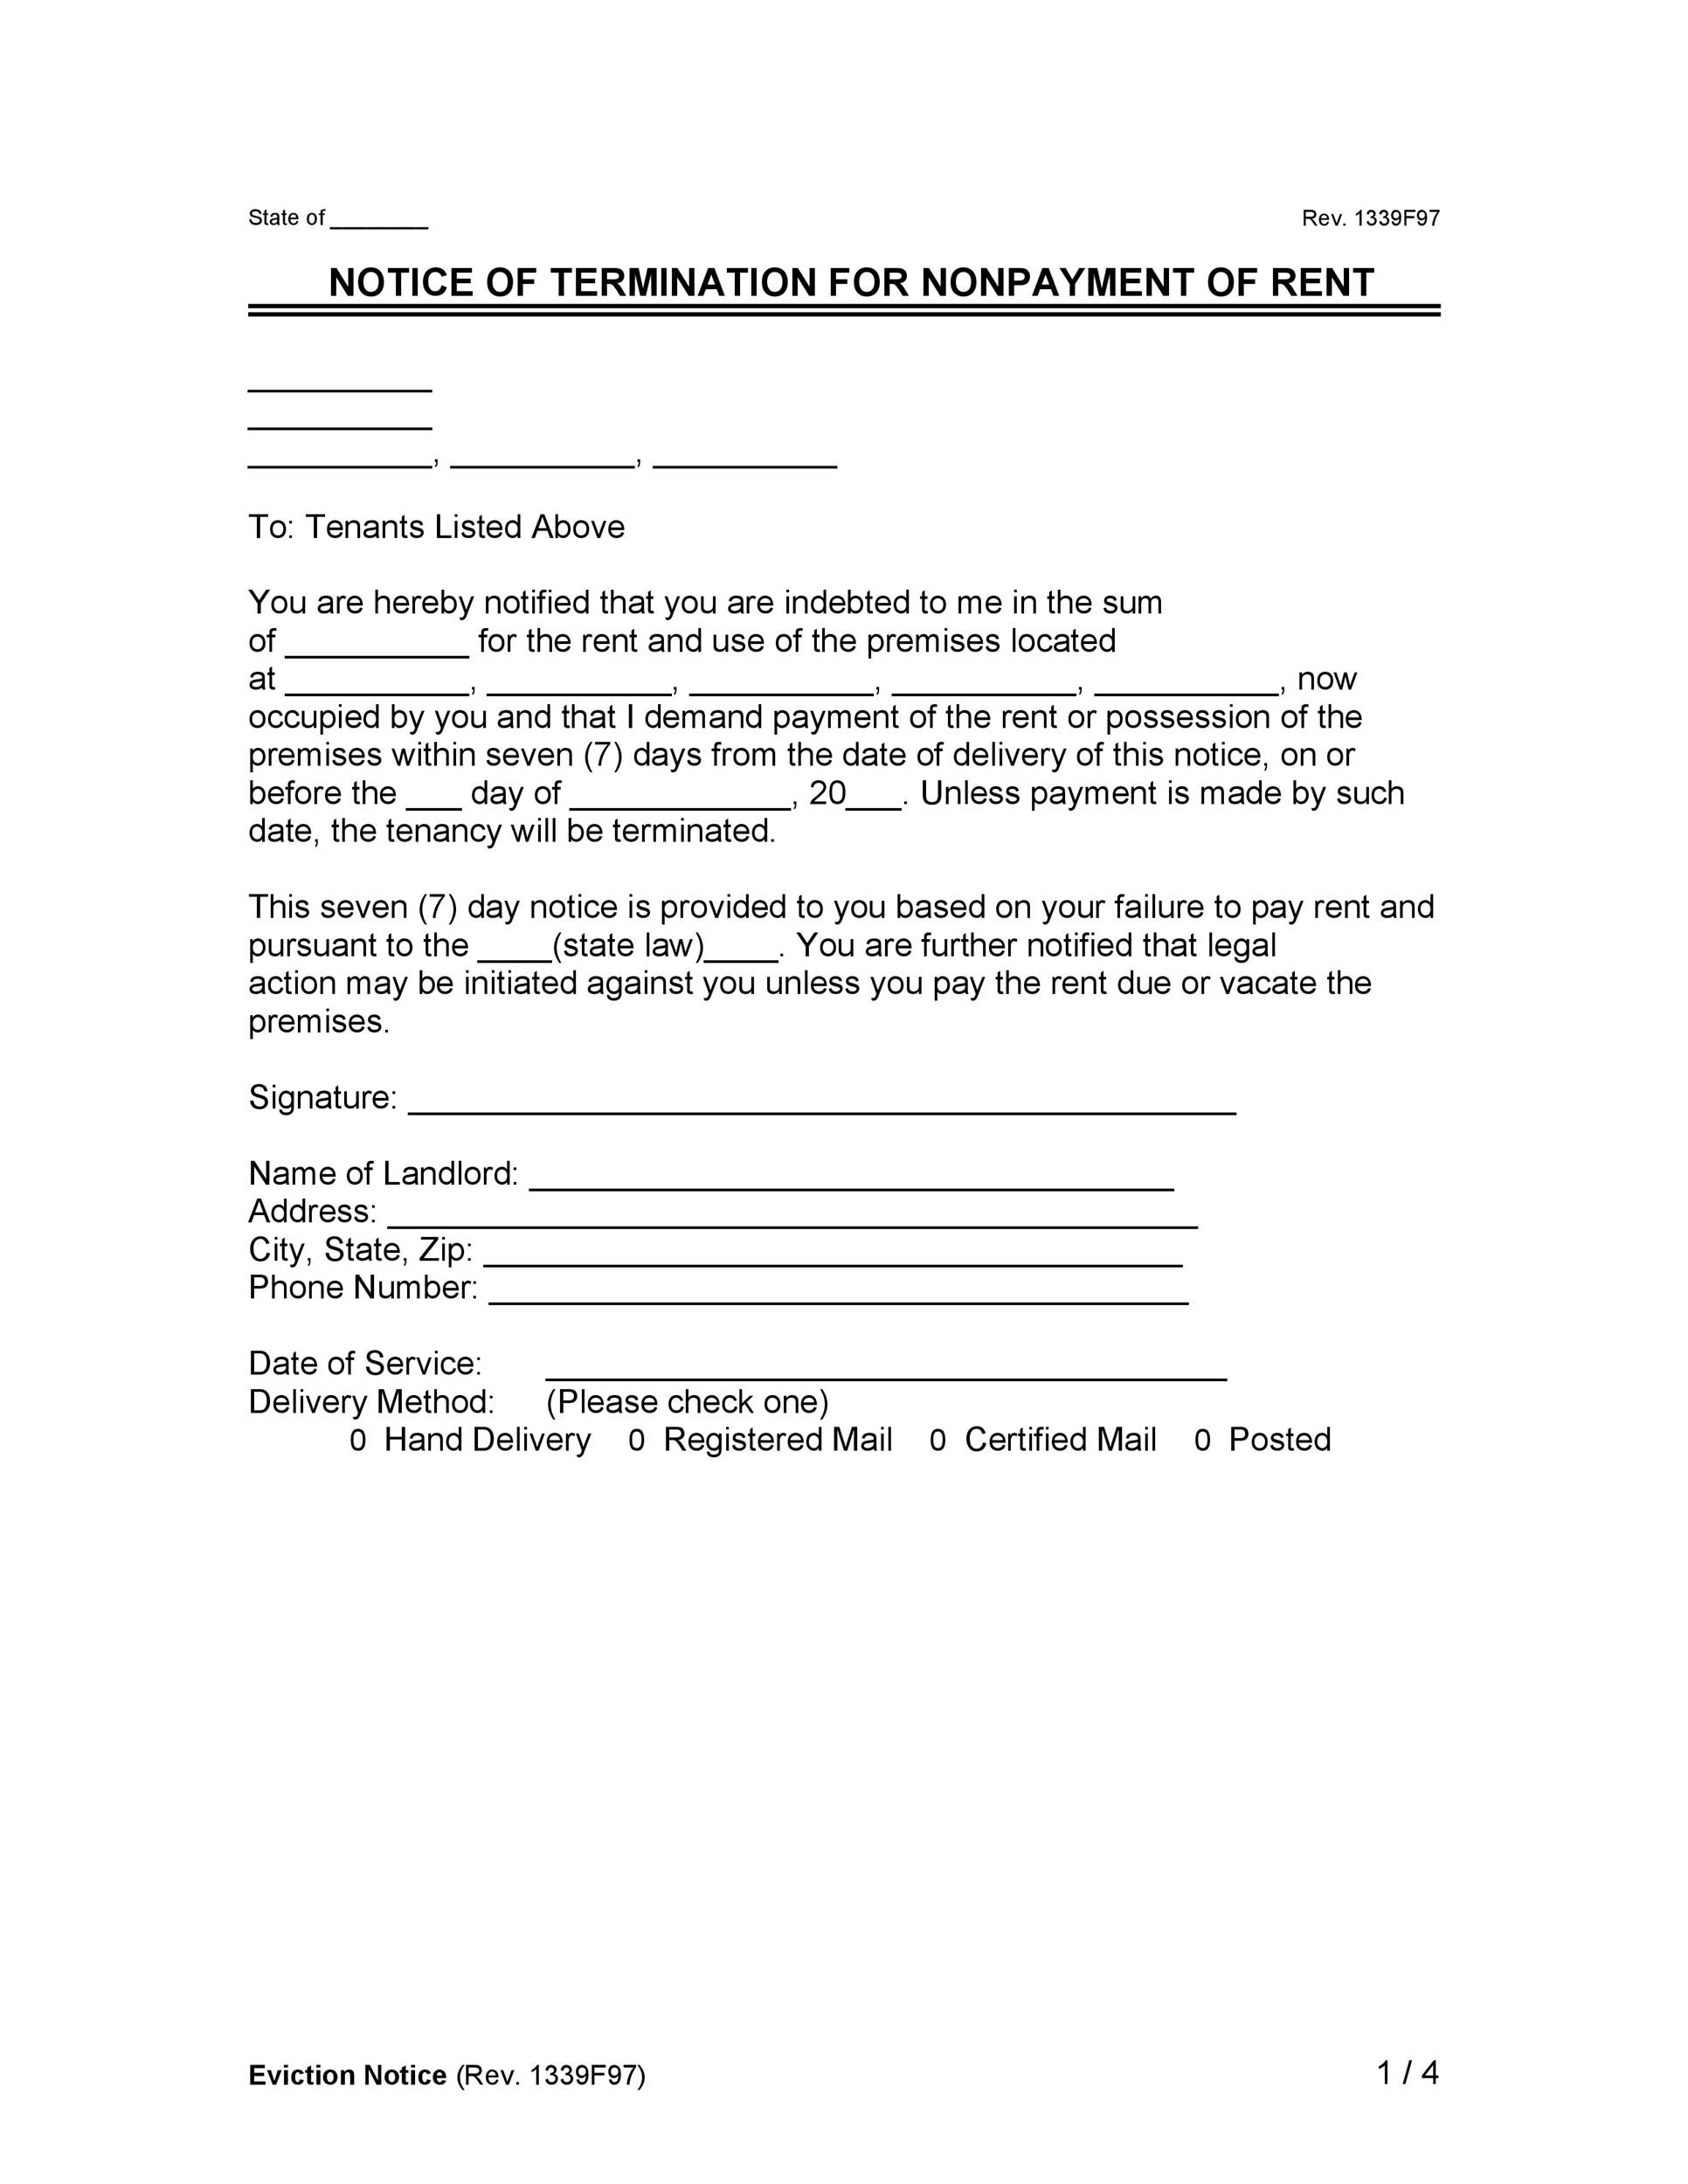 34-printable-late-rent-notice-templates-templatelab